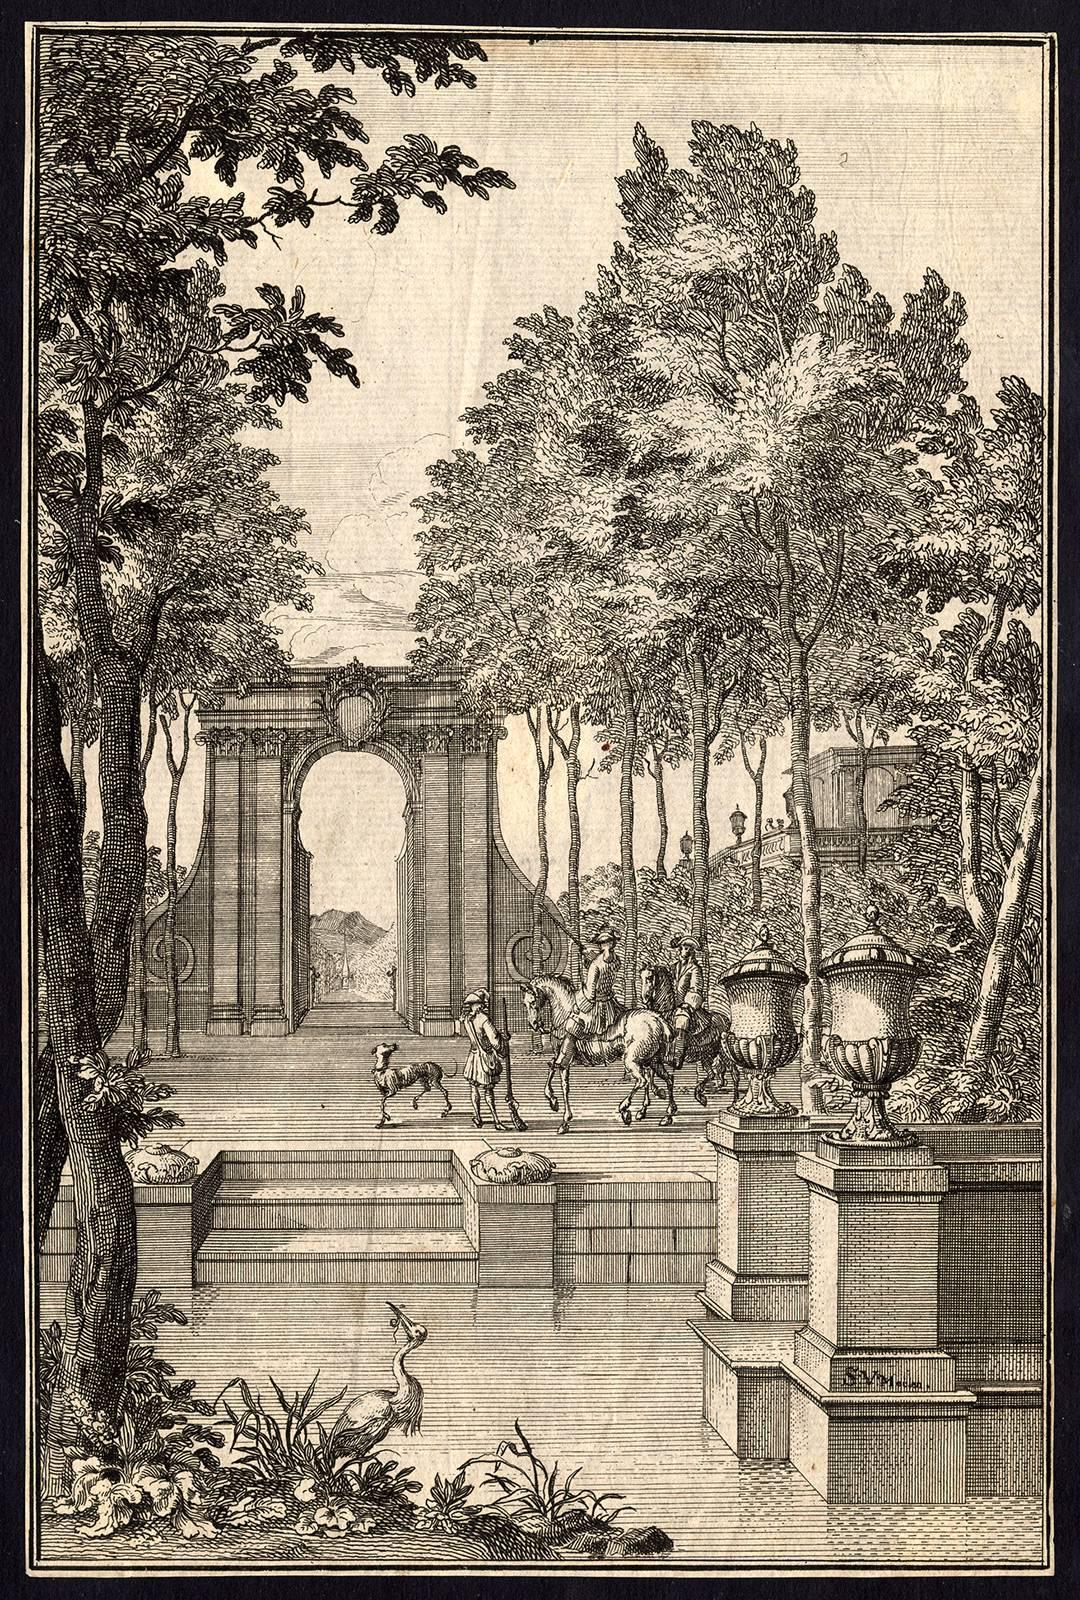 Sieuwert van der Meulen Print - This print shows: two nobles on horseback riding in an architectural garden.